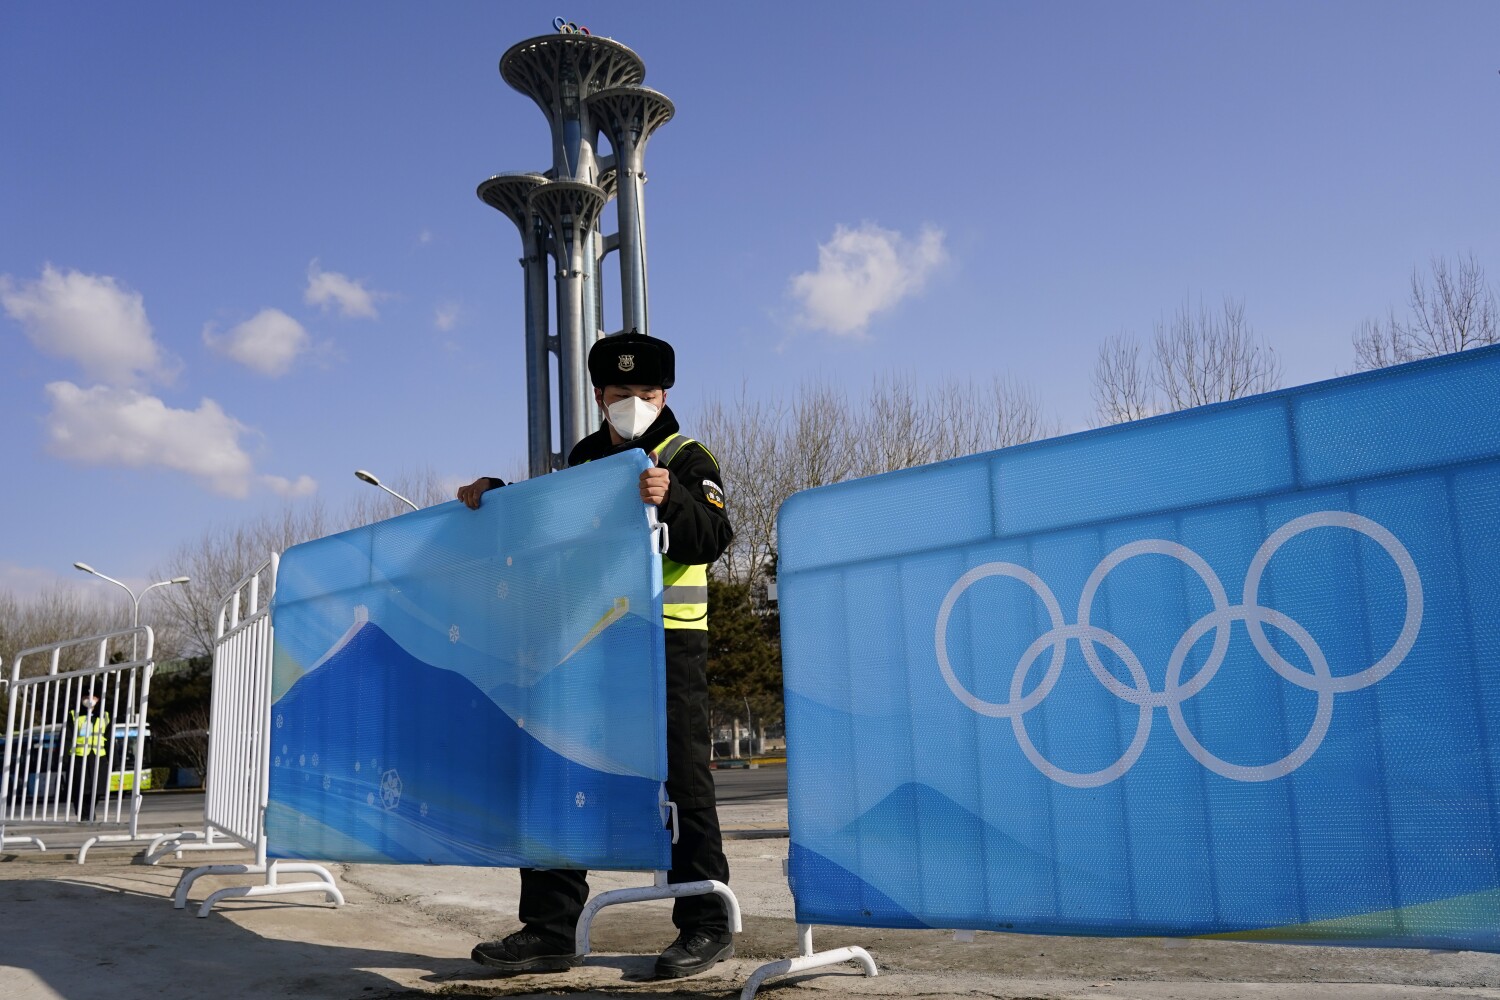 Life inside the Olympics bubble: Limbo between China and the world thumbnail